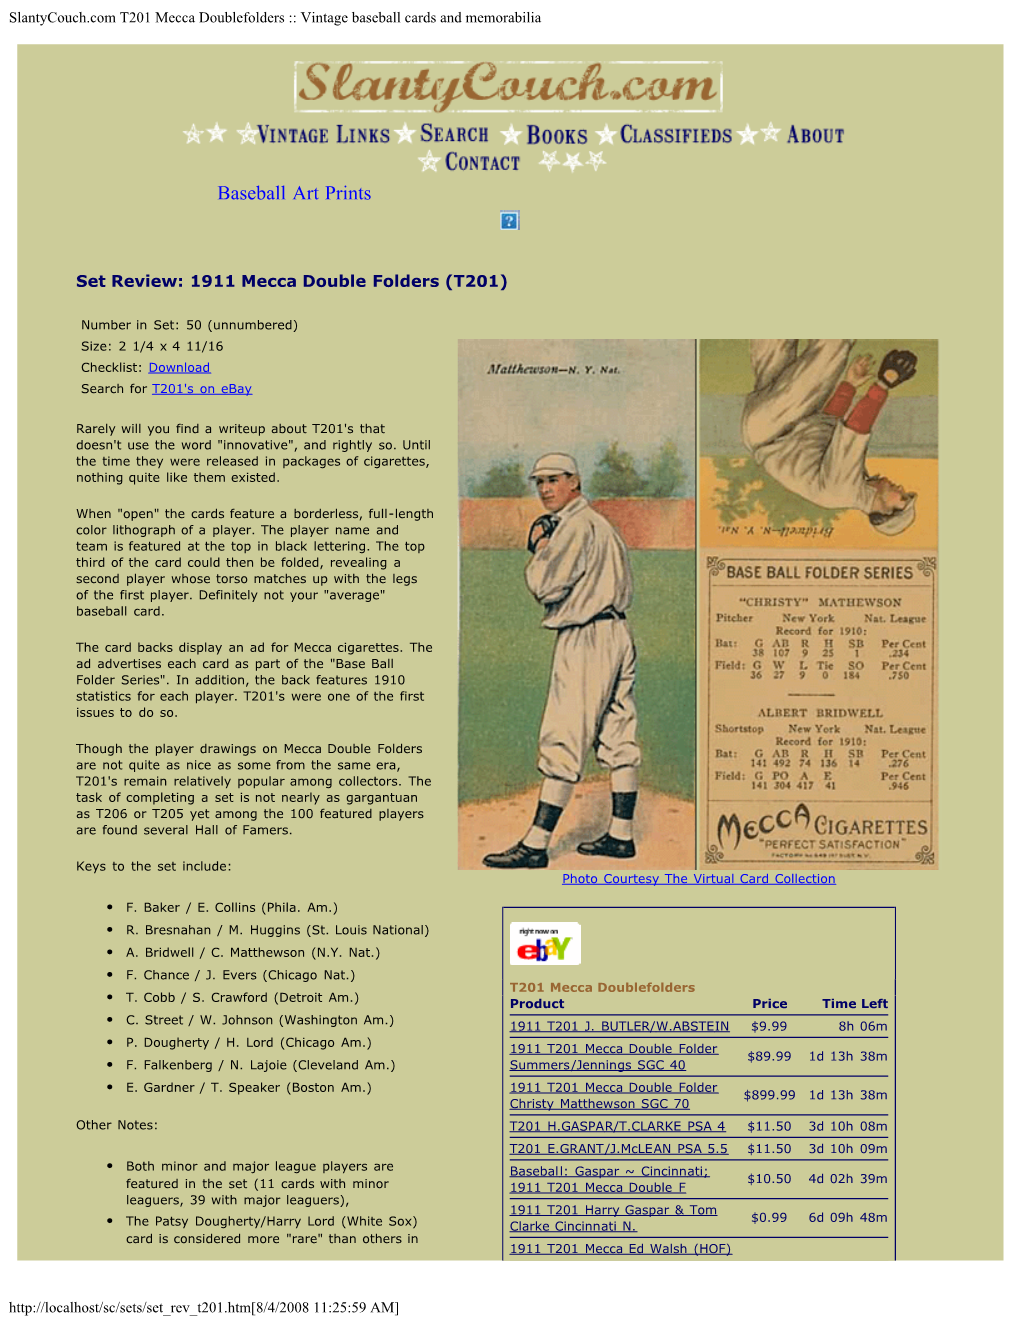 Slantycouch.Com T201 Mecca Doublefolders :: Vintage Baseball Cards and Memorabilia